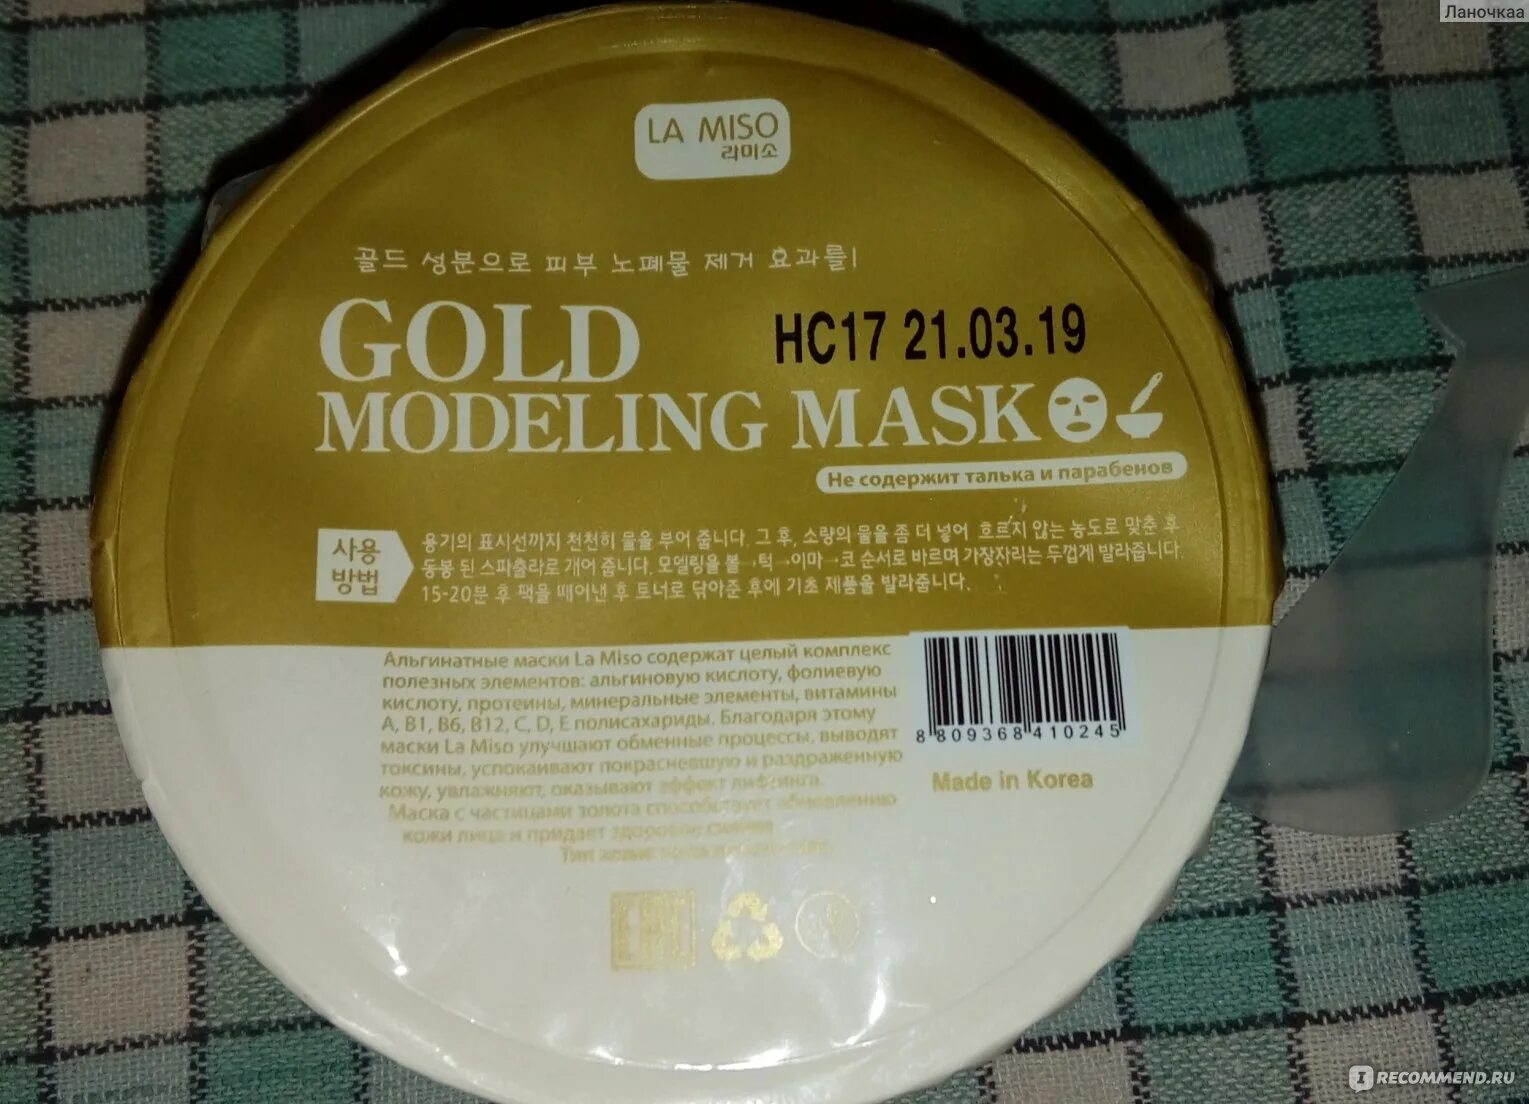 Альгинатная маска la Miso золото. Альгинатная маска с частицами золота Modeling Mask Gold, la Miso 28 г 48366. Альгинатная маска la Miso золото состав. La Miso Slote jc54 23.03.22 hyaluronicacid Modeling masks4.